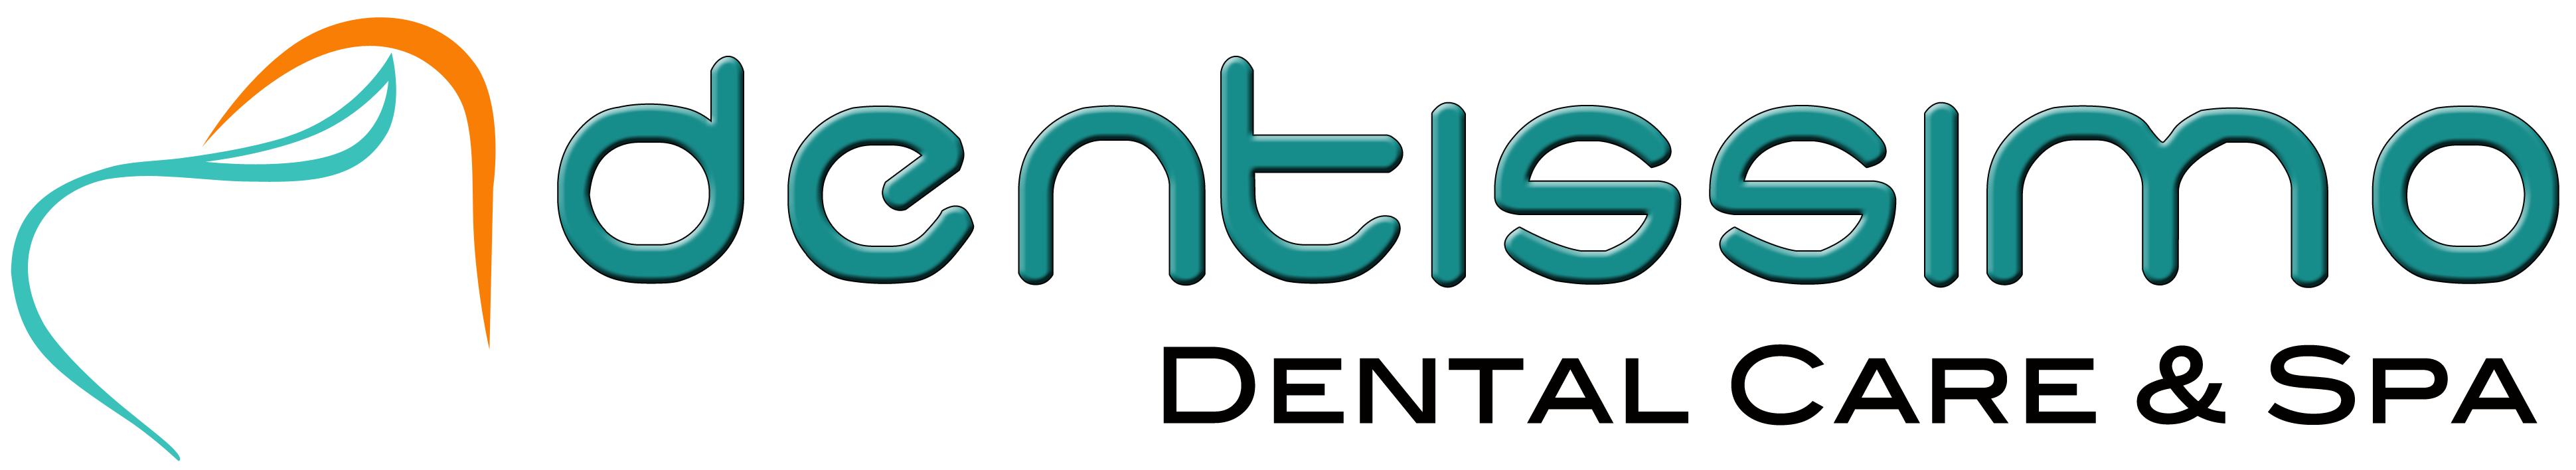 Dentissimo Dental Care & Spa|Healthcare|Medical Services